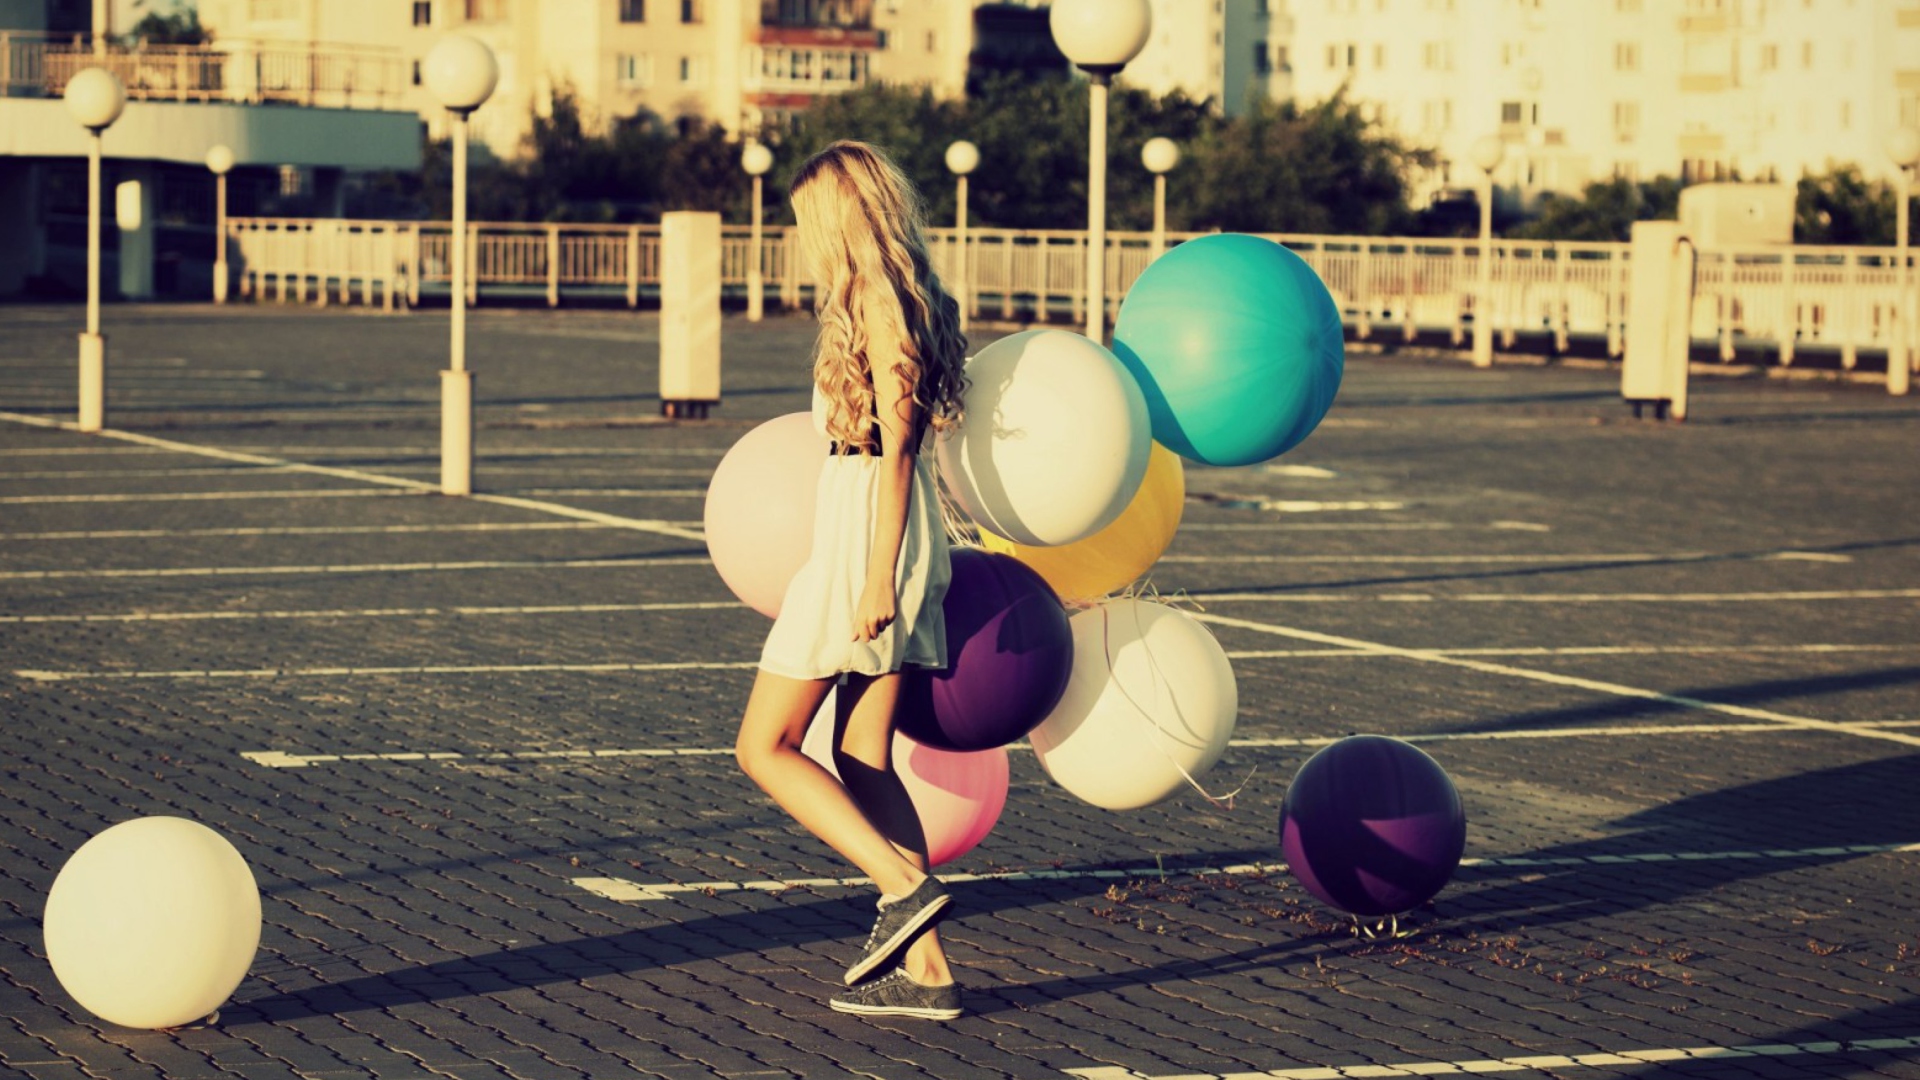 Обои Happy Girl With Colorful Balloons 1920x1080